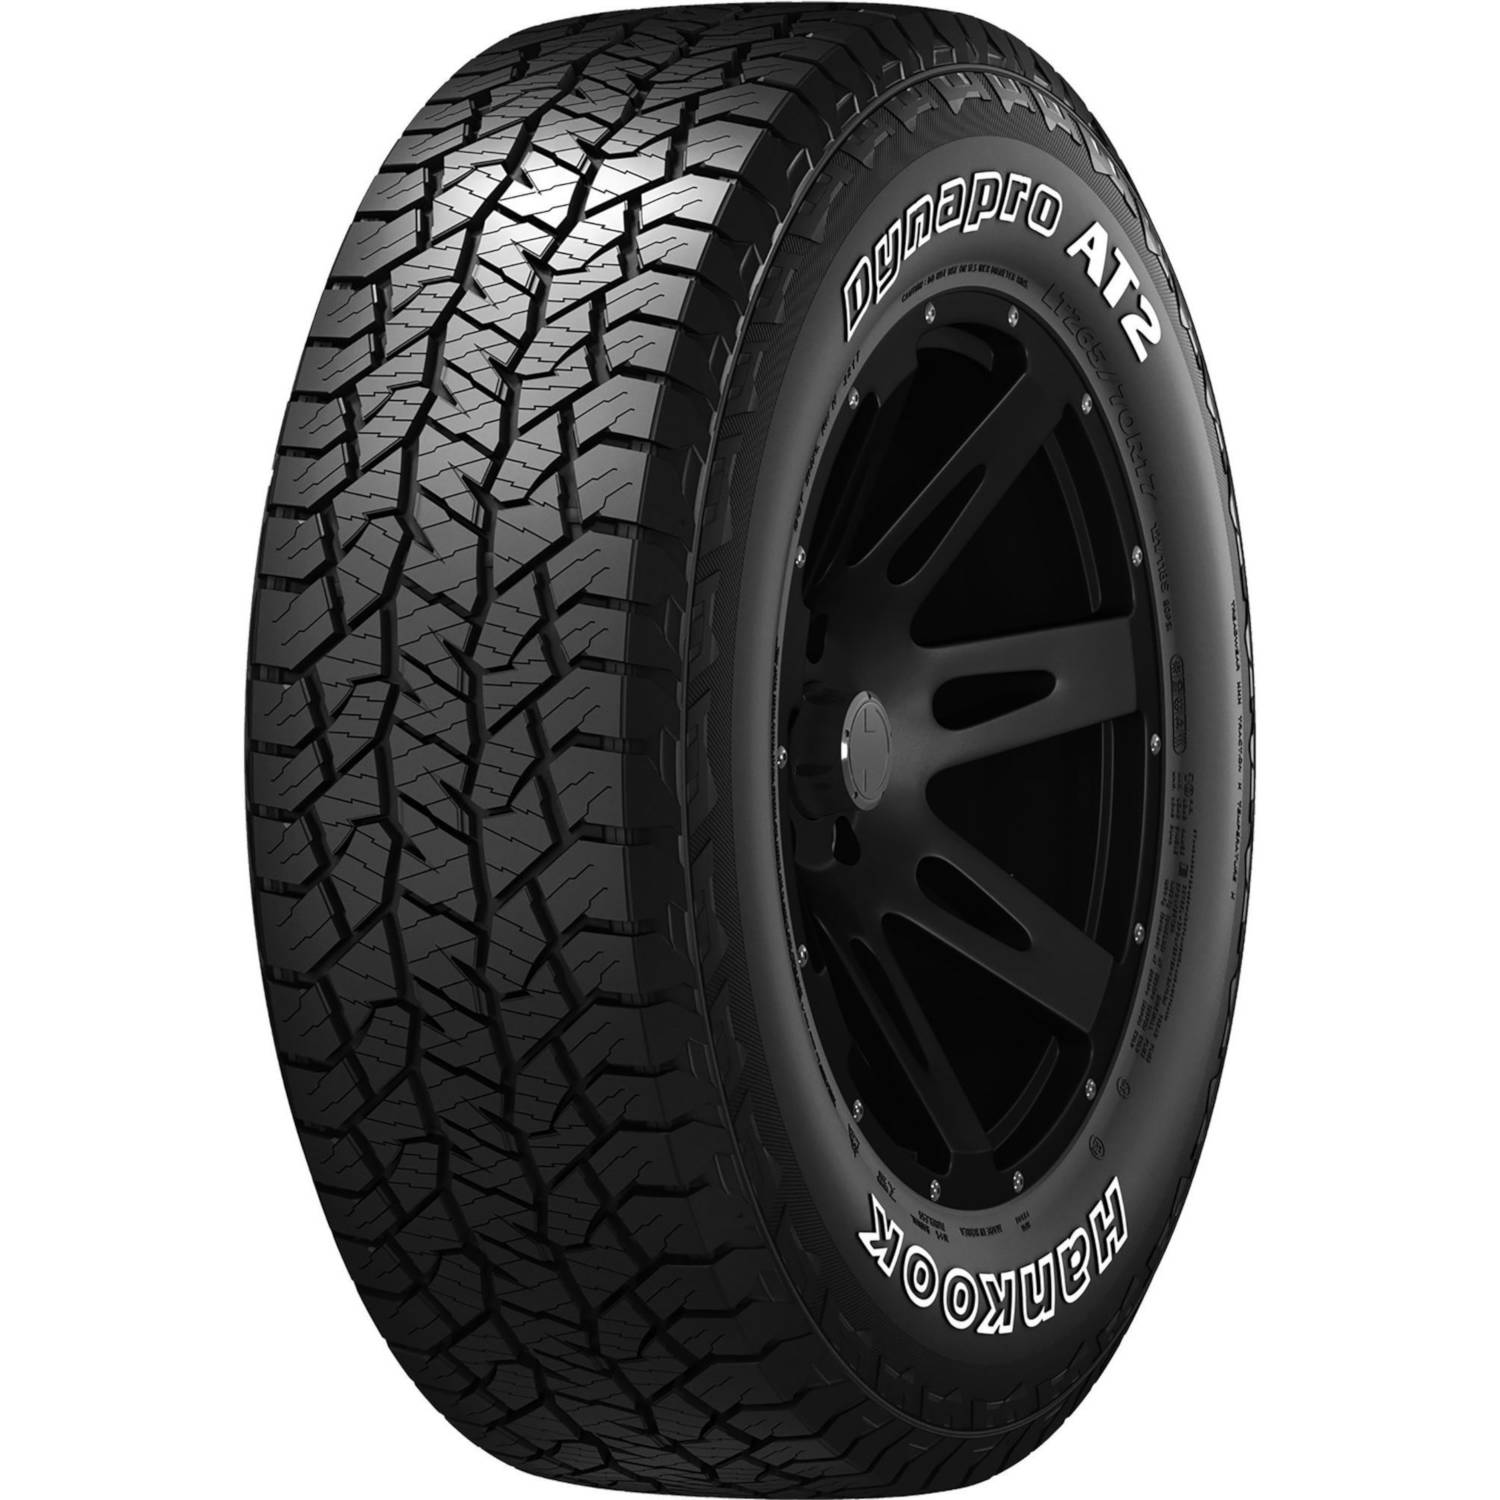 HANKOOK DYNAPRO AT2 245/70R16 XL (29.5X9.7R 16) Tires